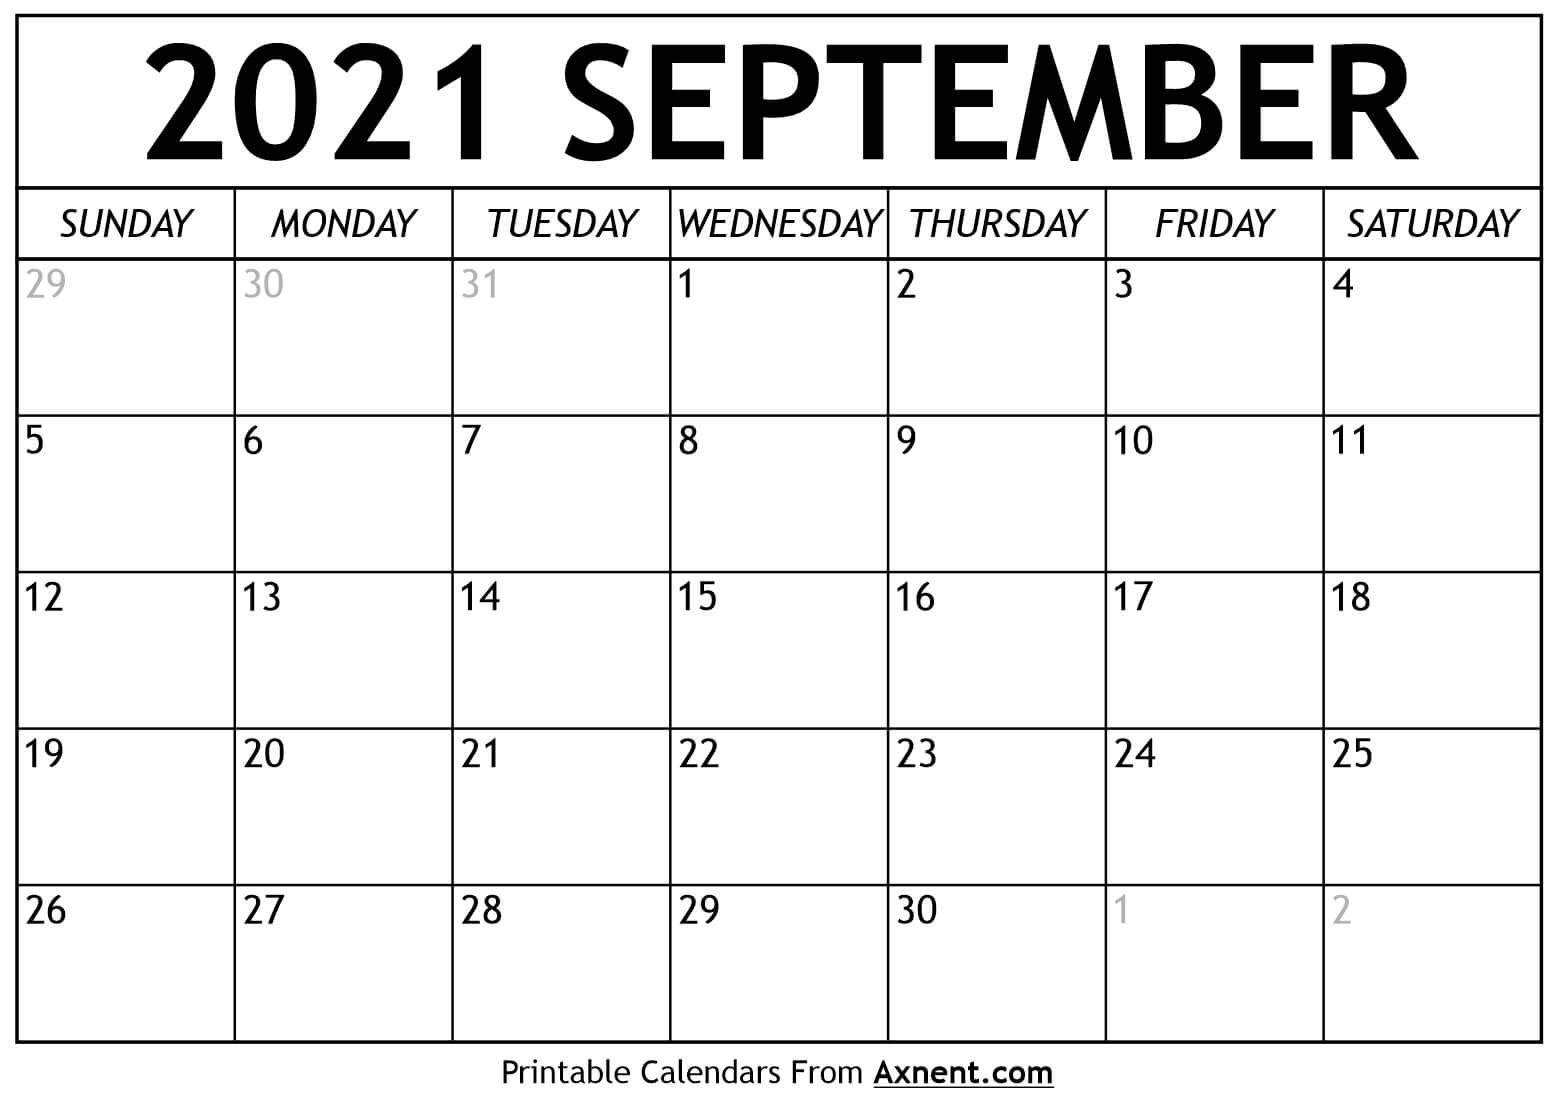 Printable September 2021 Calendar Template - Time Management Tools Printable September 2021 September 2021 Calendar Reading